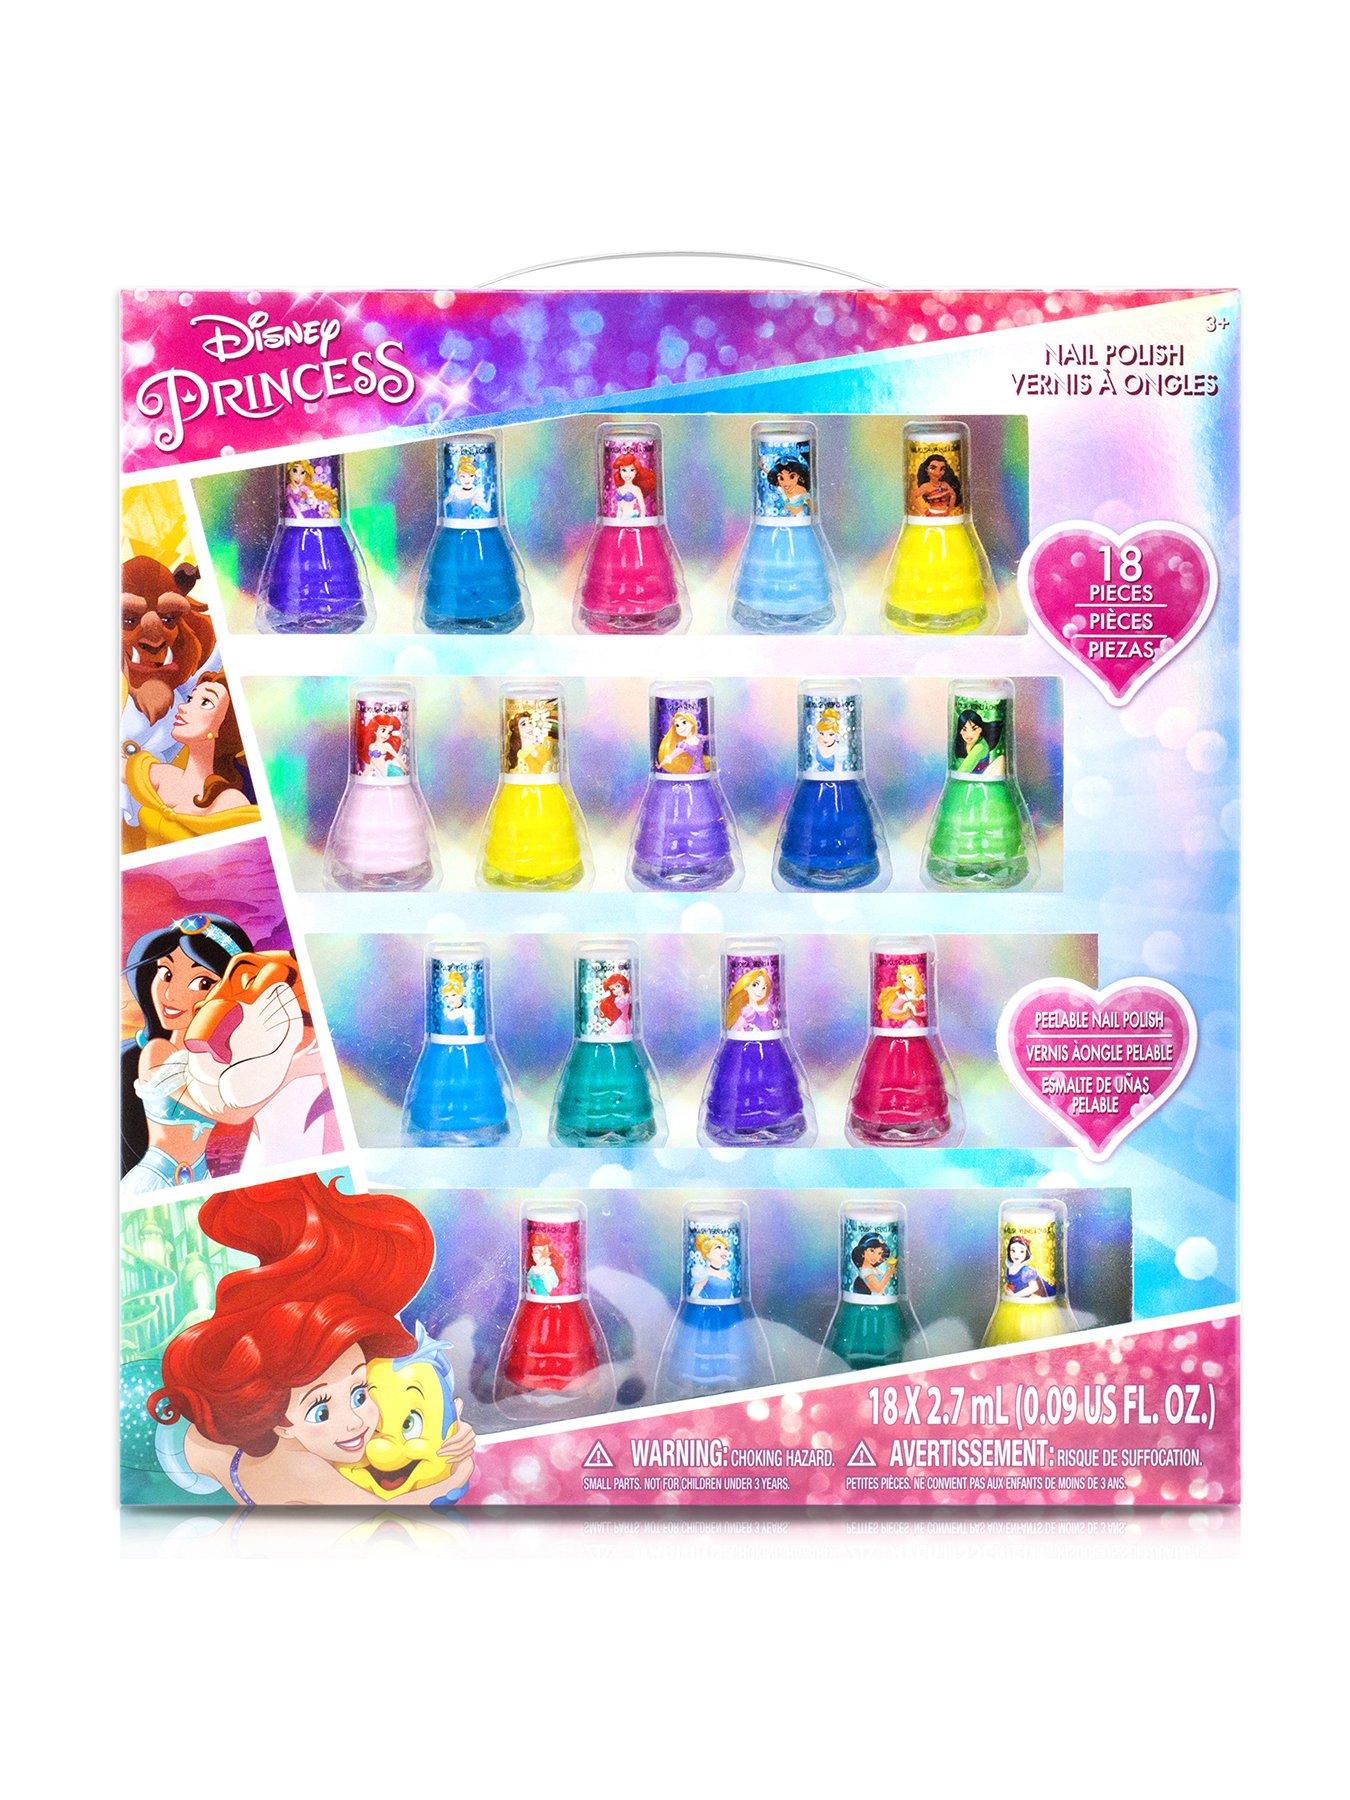 Disney Princess Toys, Games & Accessories